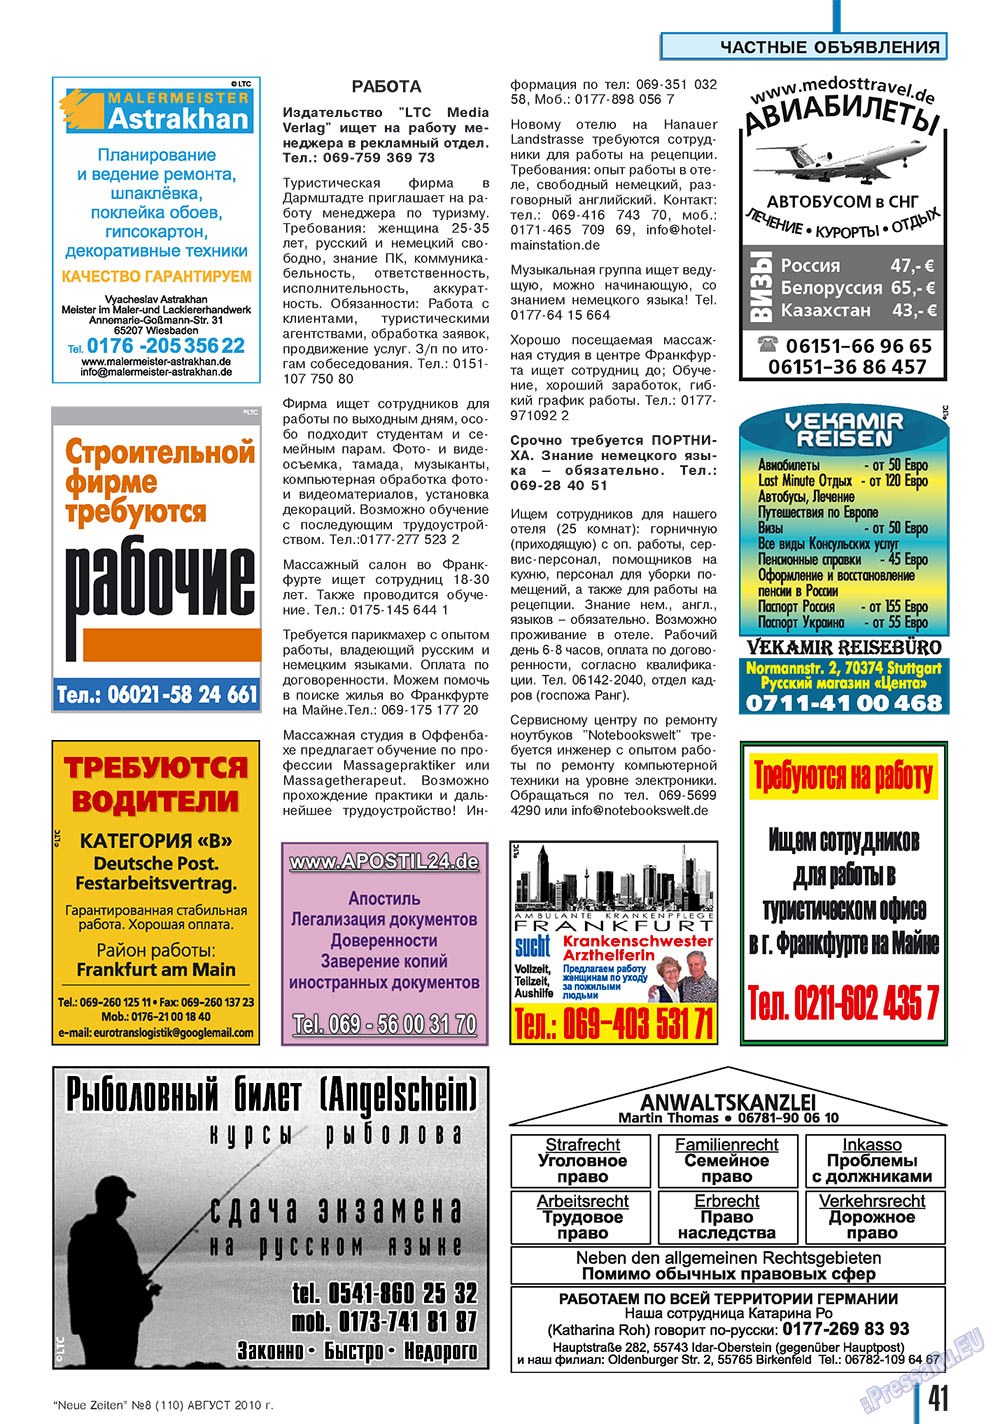 Neue Zeiten (журнал). 2010 год, номер 8, стр. 41